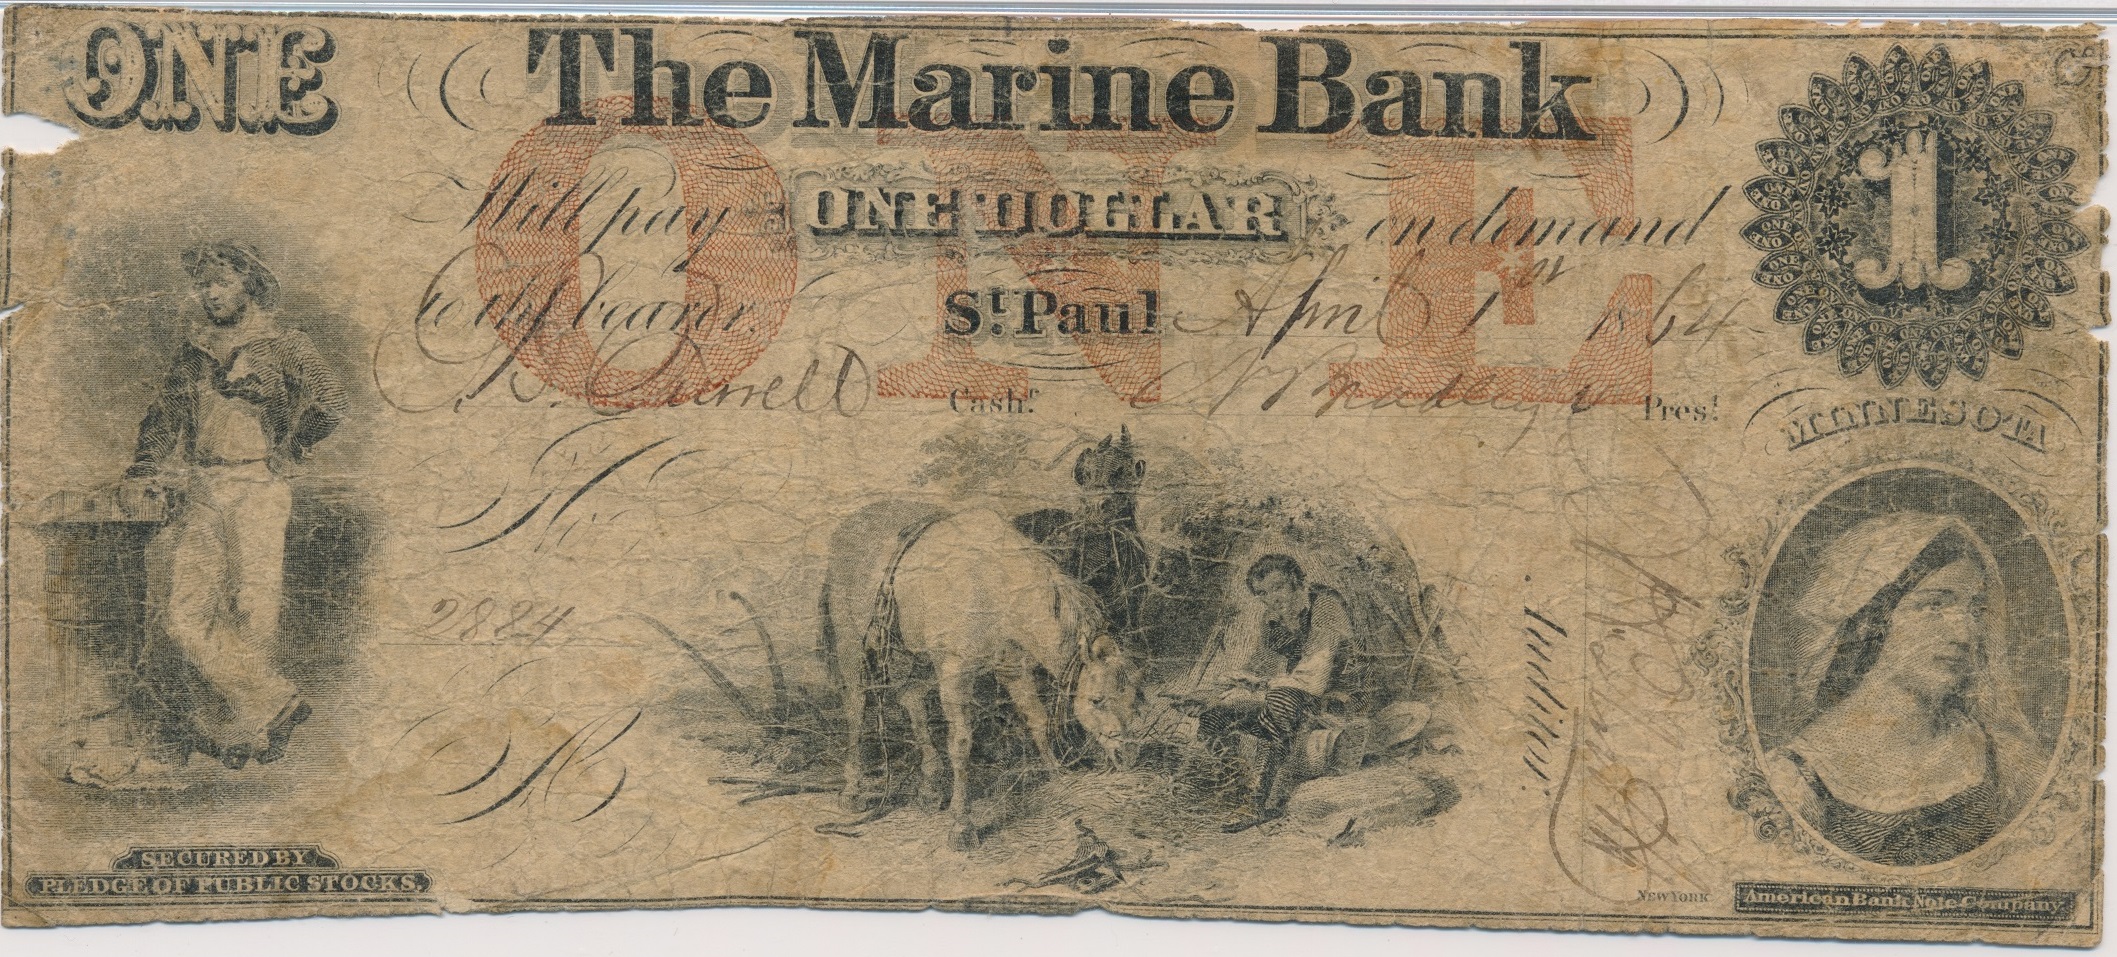 $1 Marine Bank